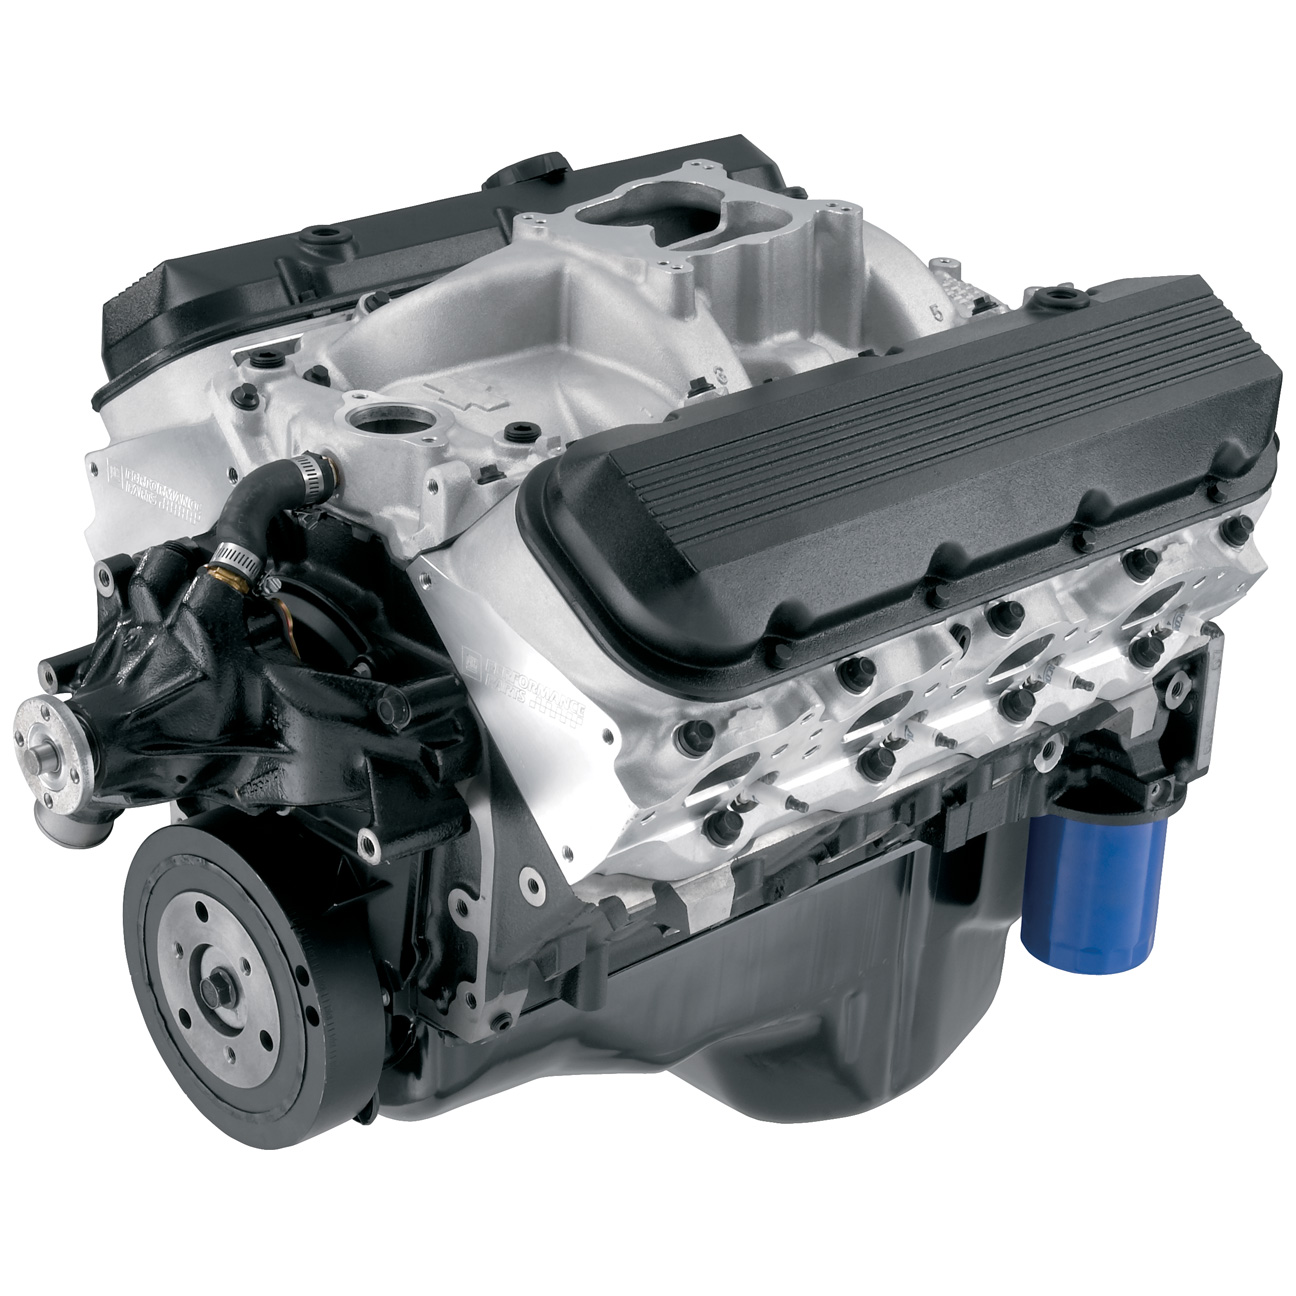 ZZ454/440 454ci Engine w/ Aluminum Heads 469 HP @ 5500 RPM